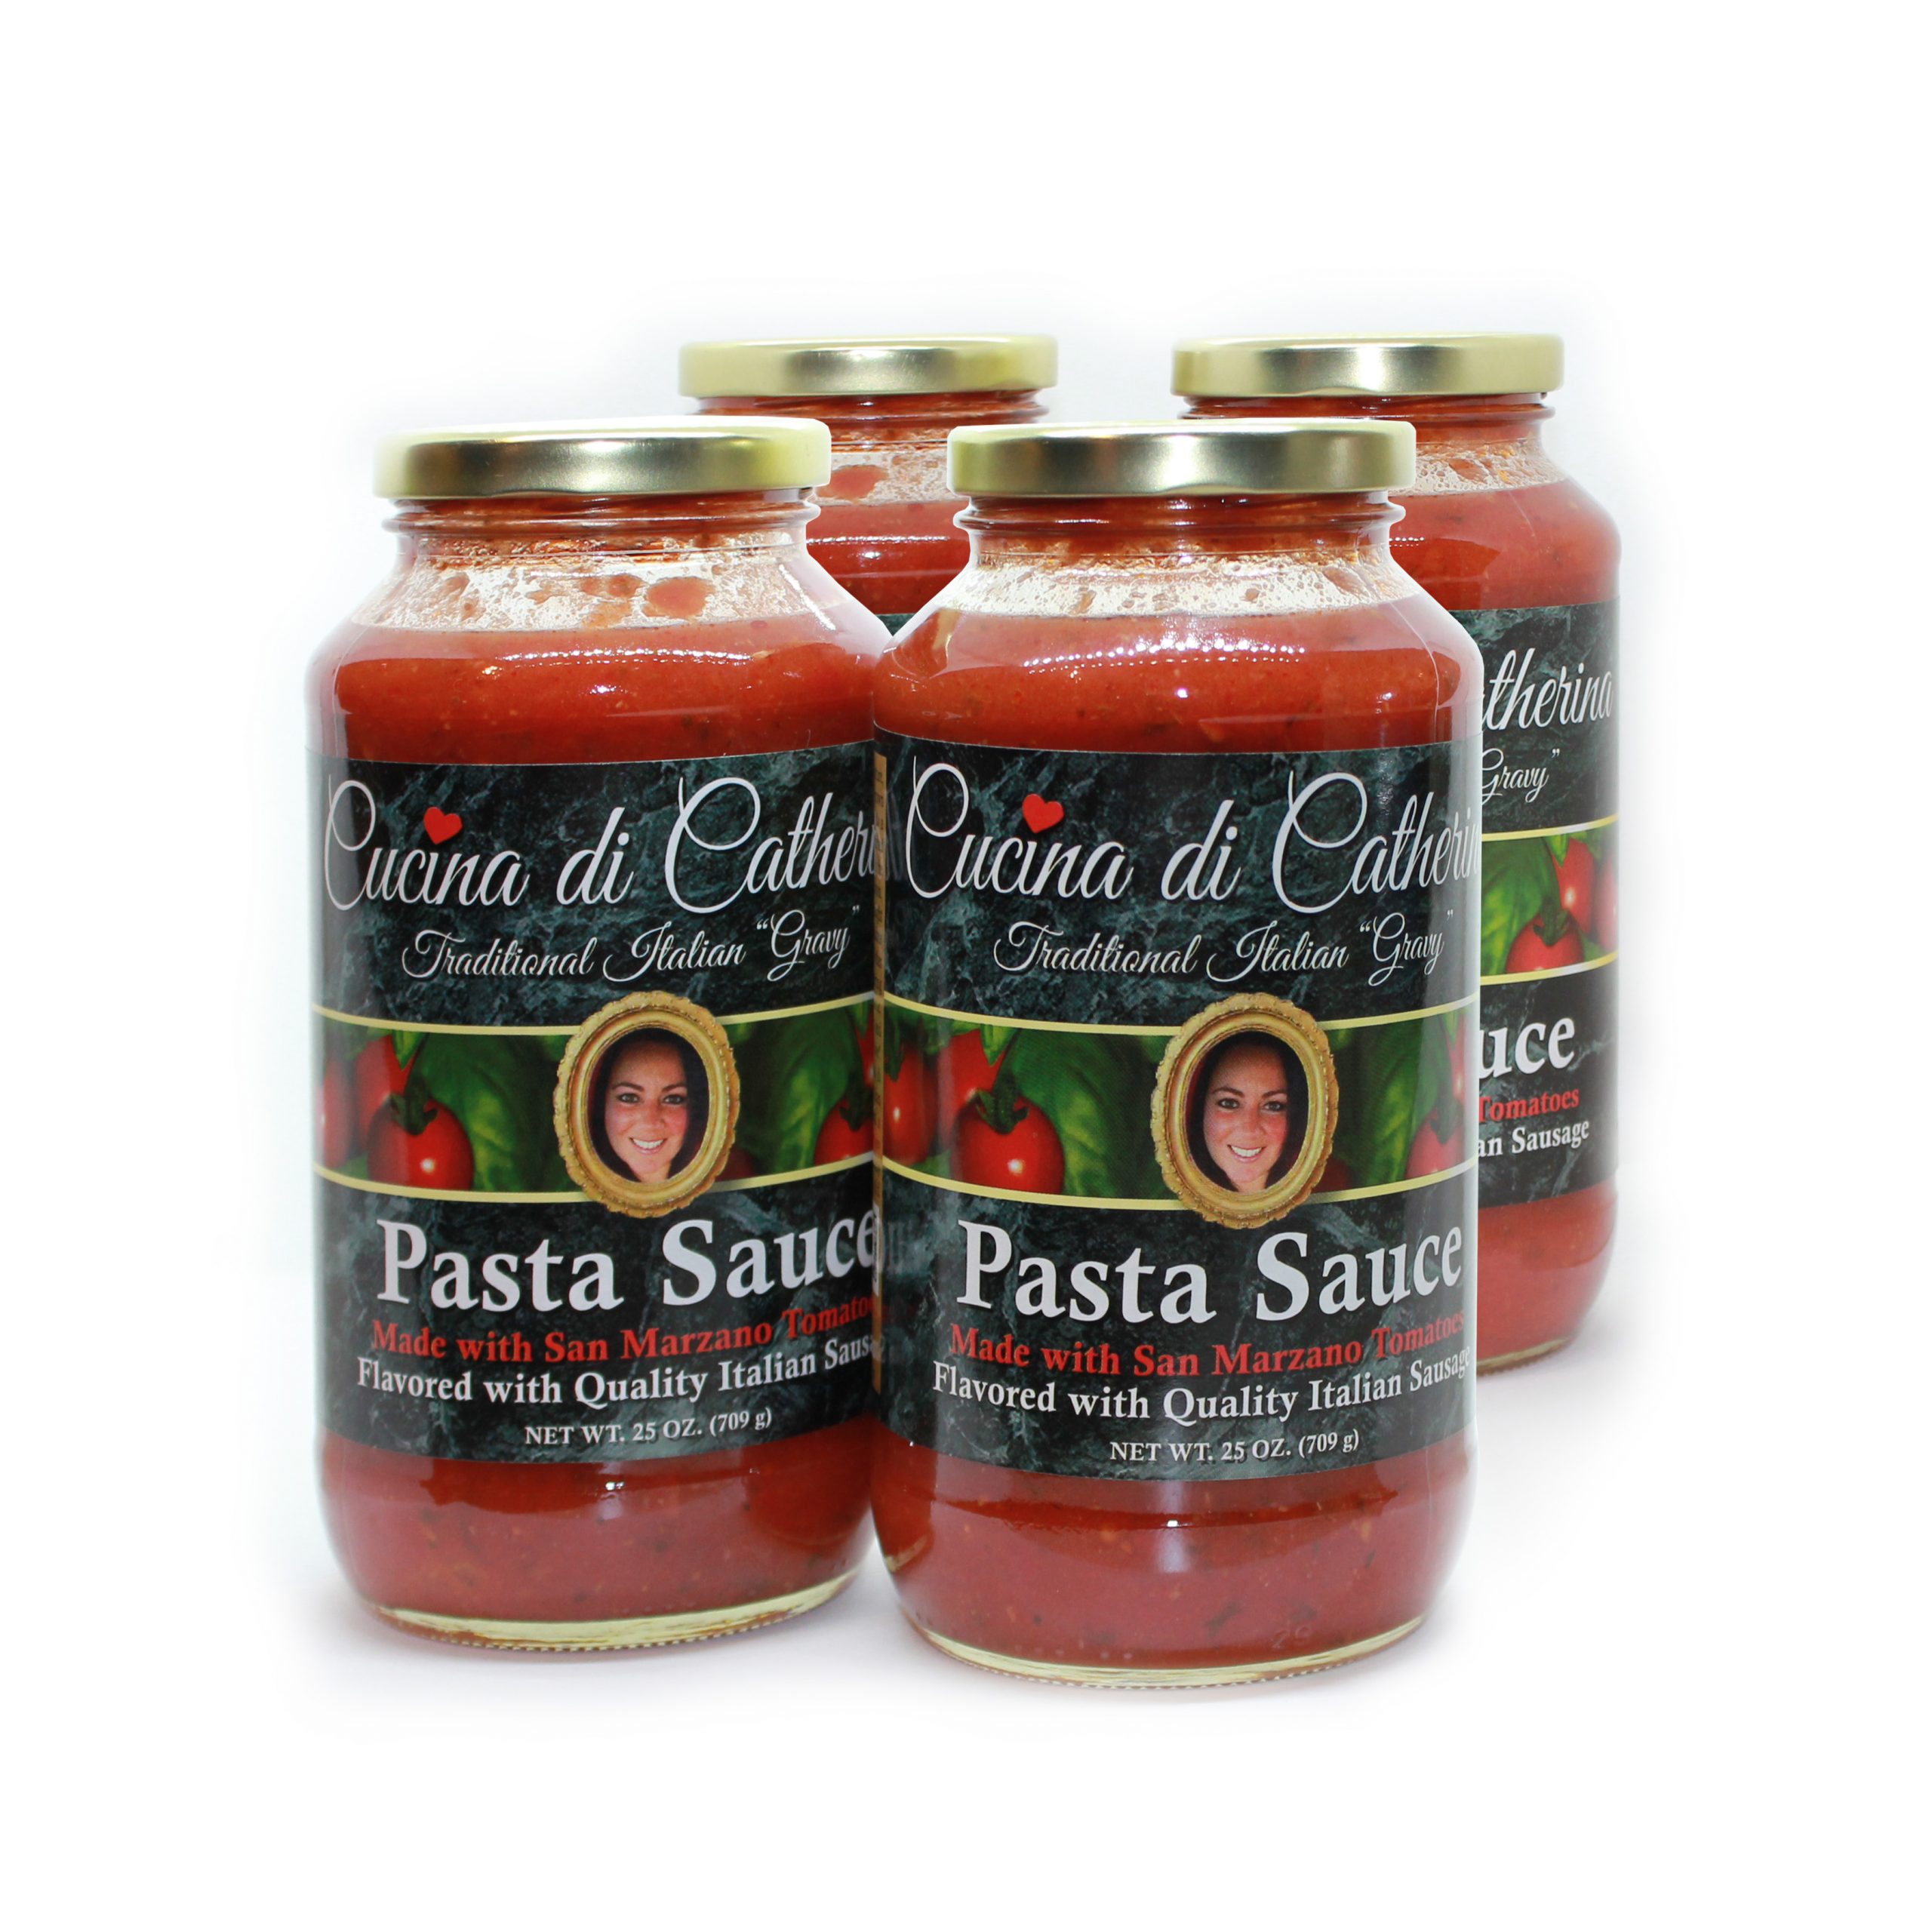 Cucina di Catherina Traditional Italian “Gravy” Pasta Sauce 4 Pack